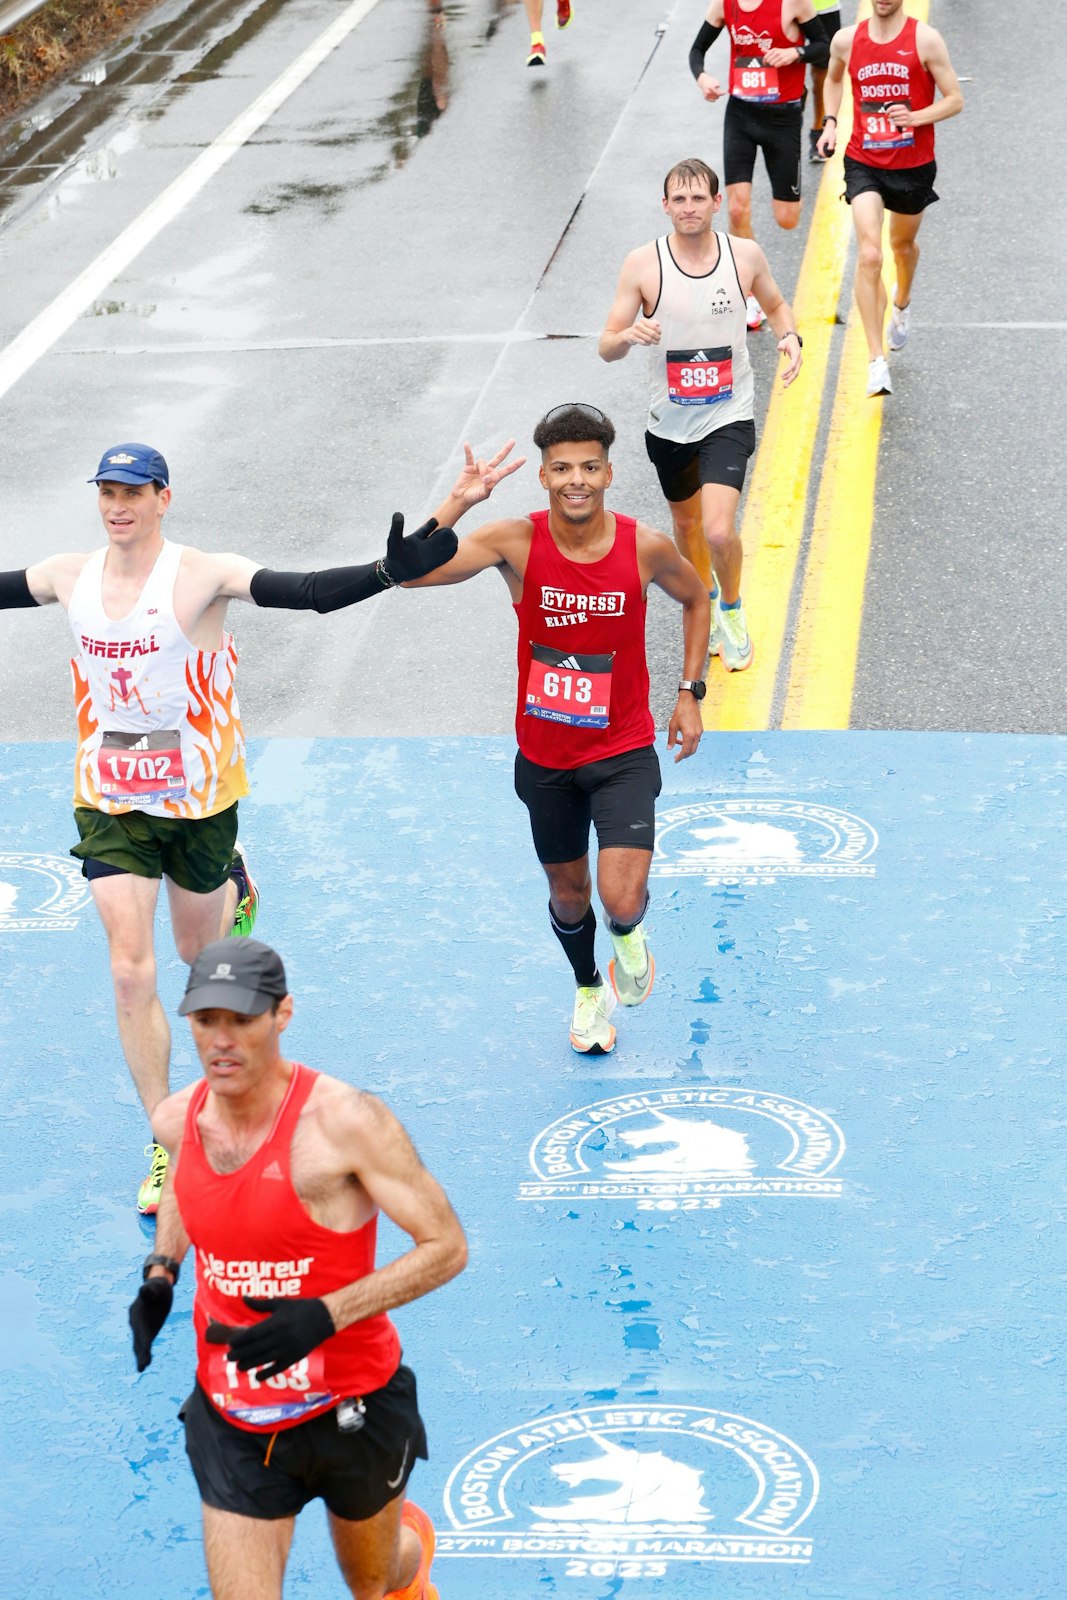 Deacon Seamus Kettner, left, raises his arms to pump up the crowd around the 16-mile mark during the Boston Marathon on April 17. (Courtesy photos)